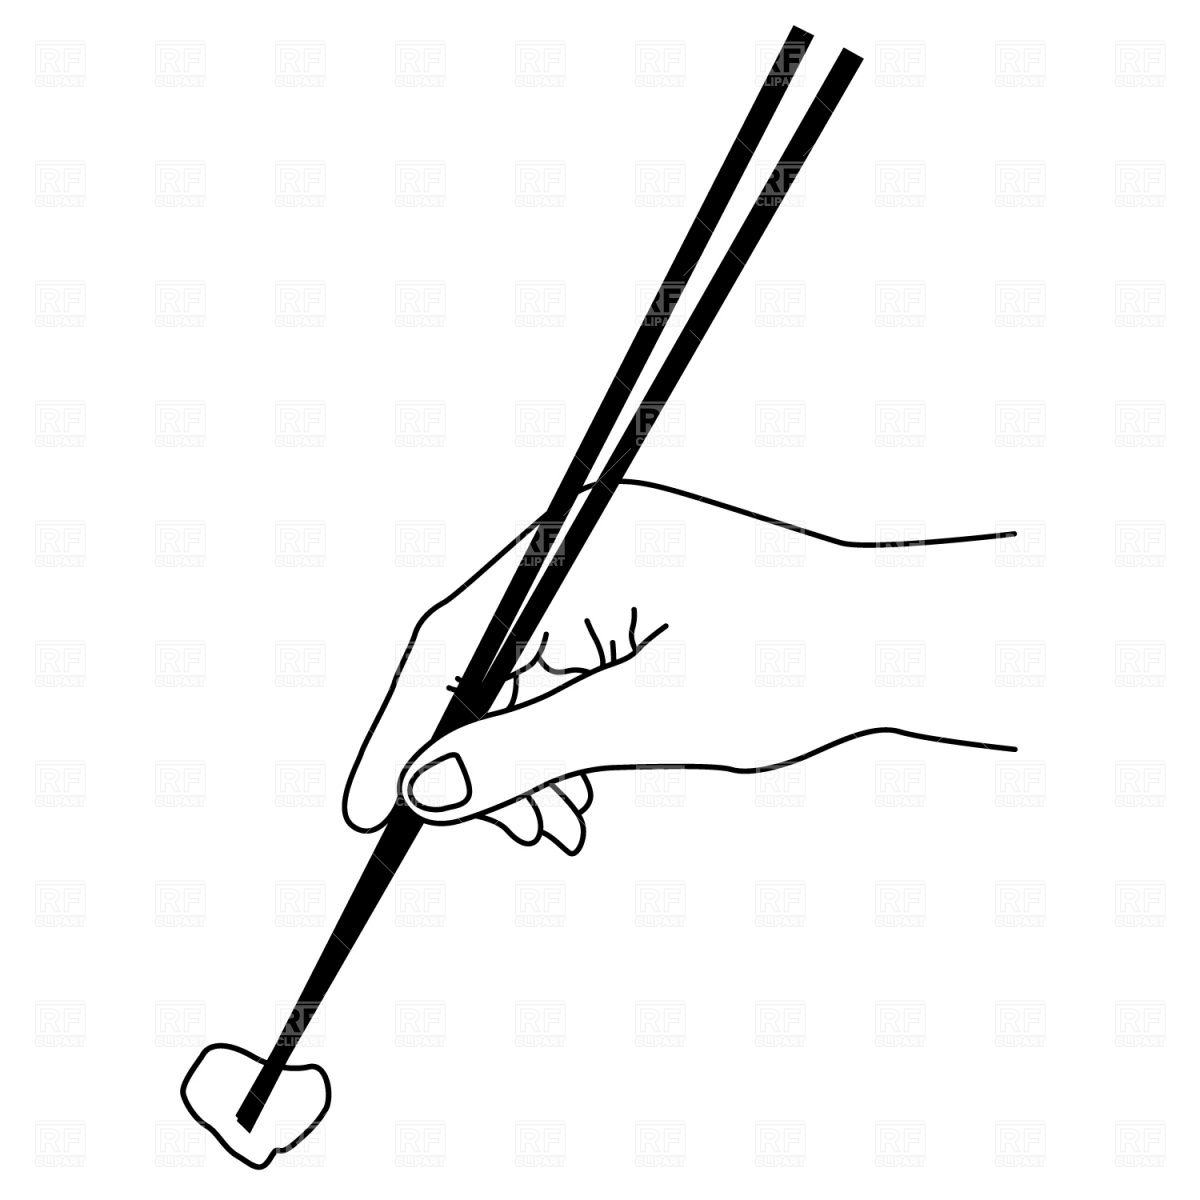 Chopsticks drawing